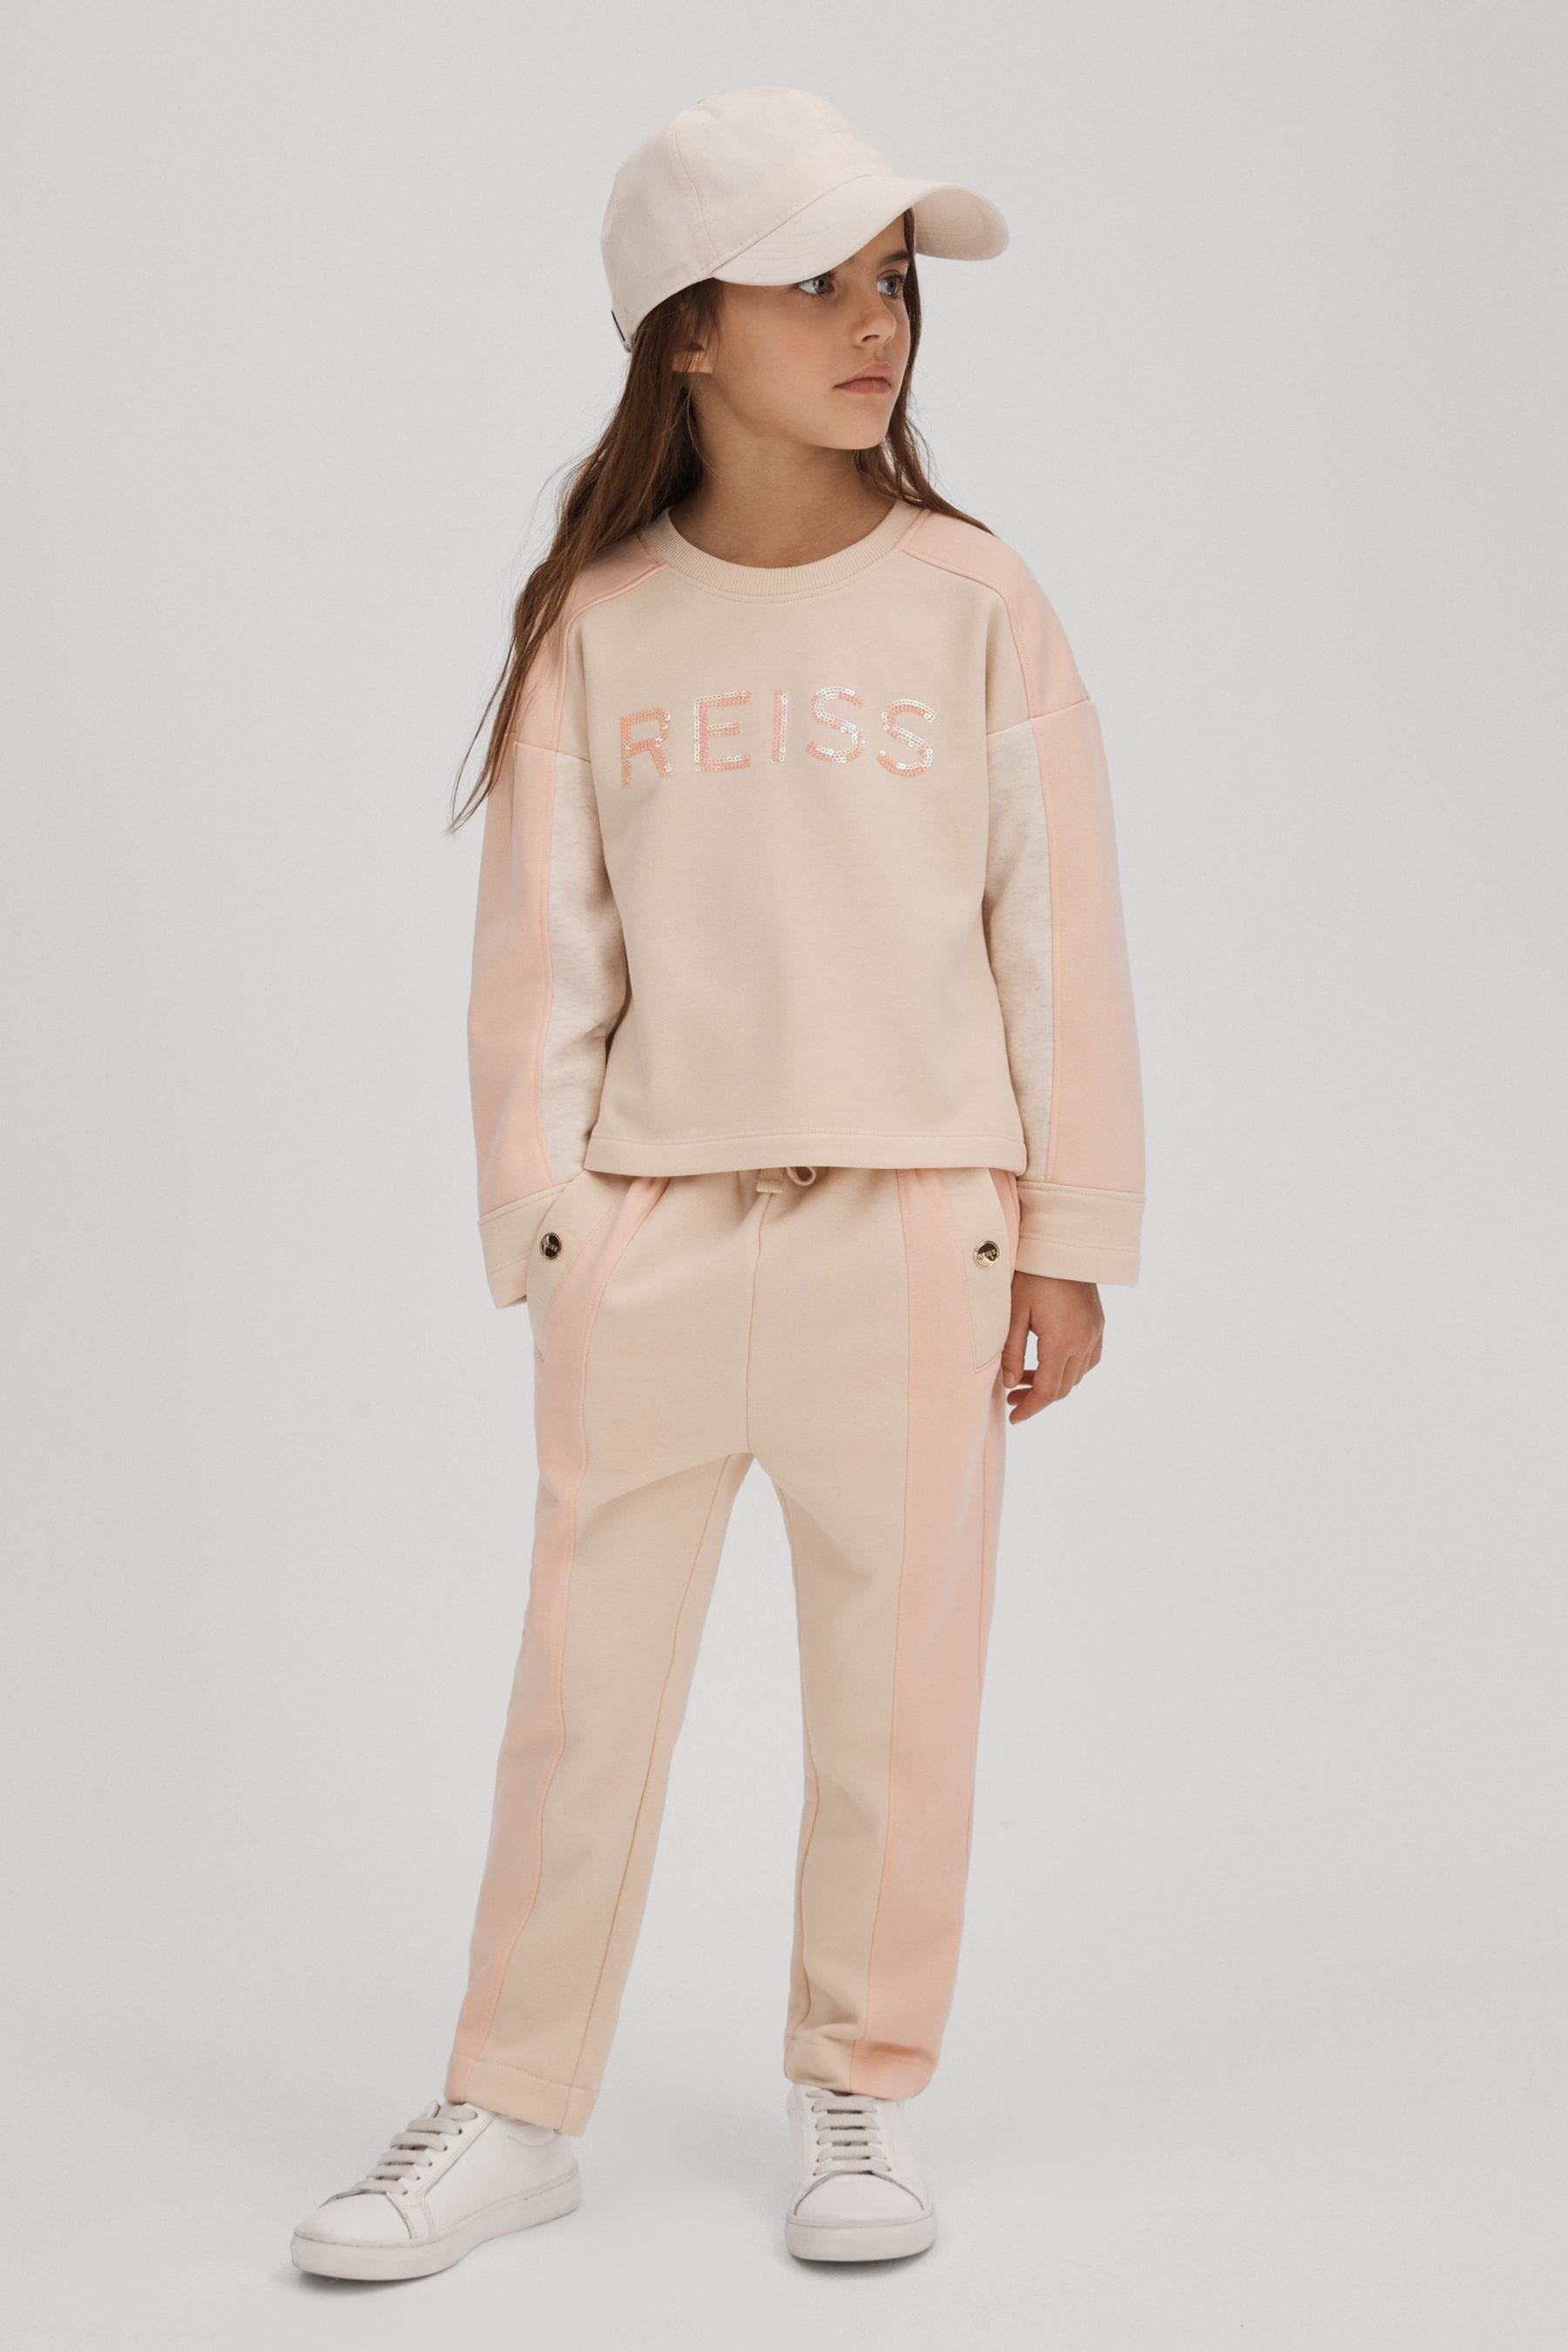 Reiss Kids' Ivy - Pink Senior Cotton Blend Sequin Sweatshirt, Uk 9-10 Yrs